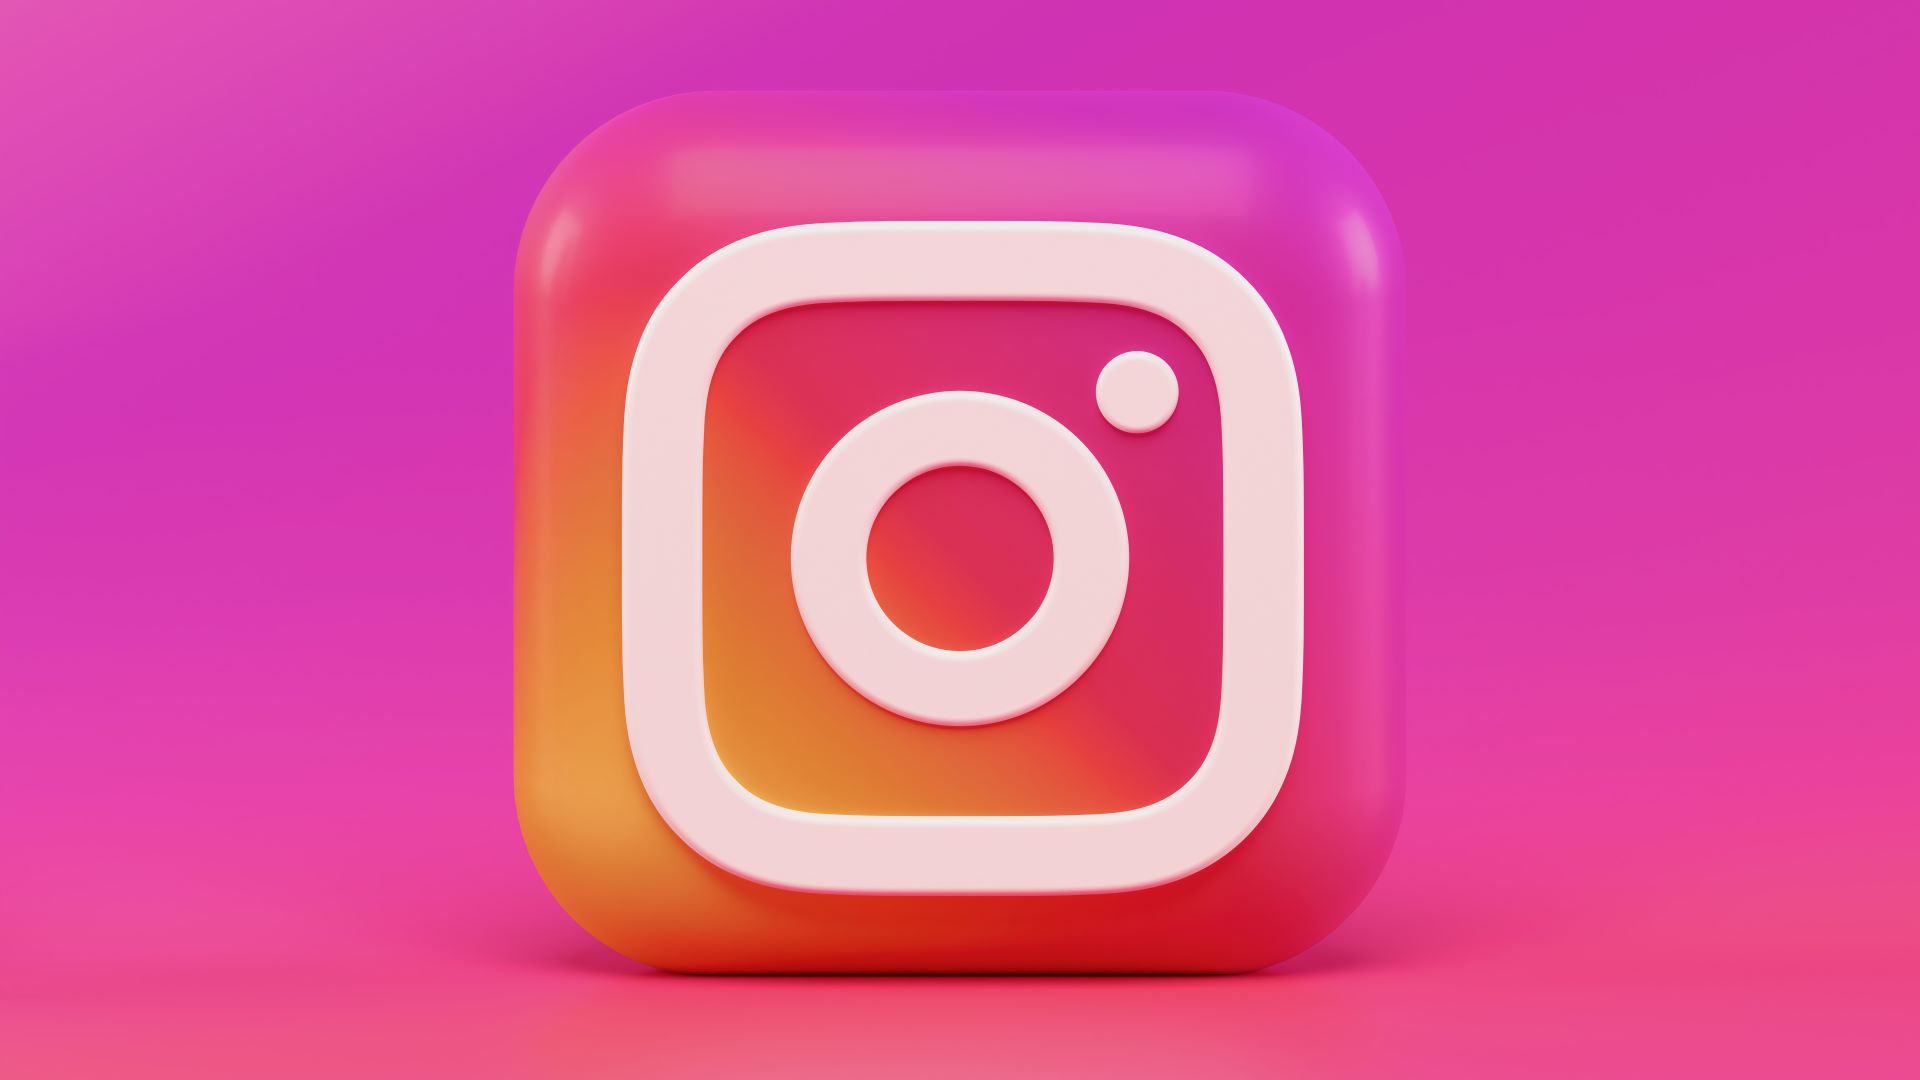 A 3D model of the Instagram logo.